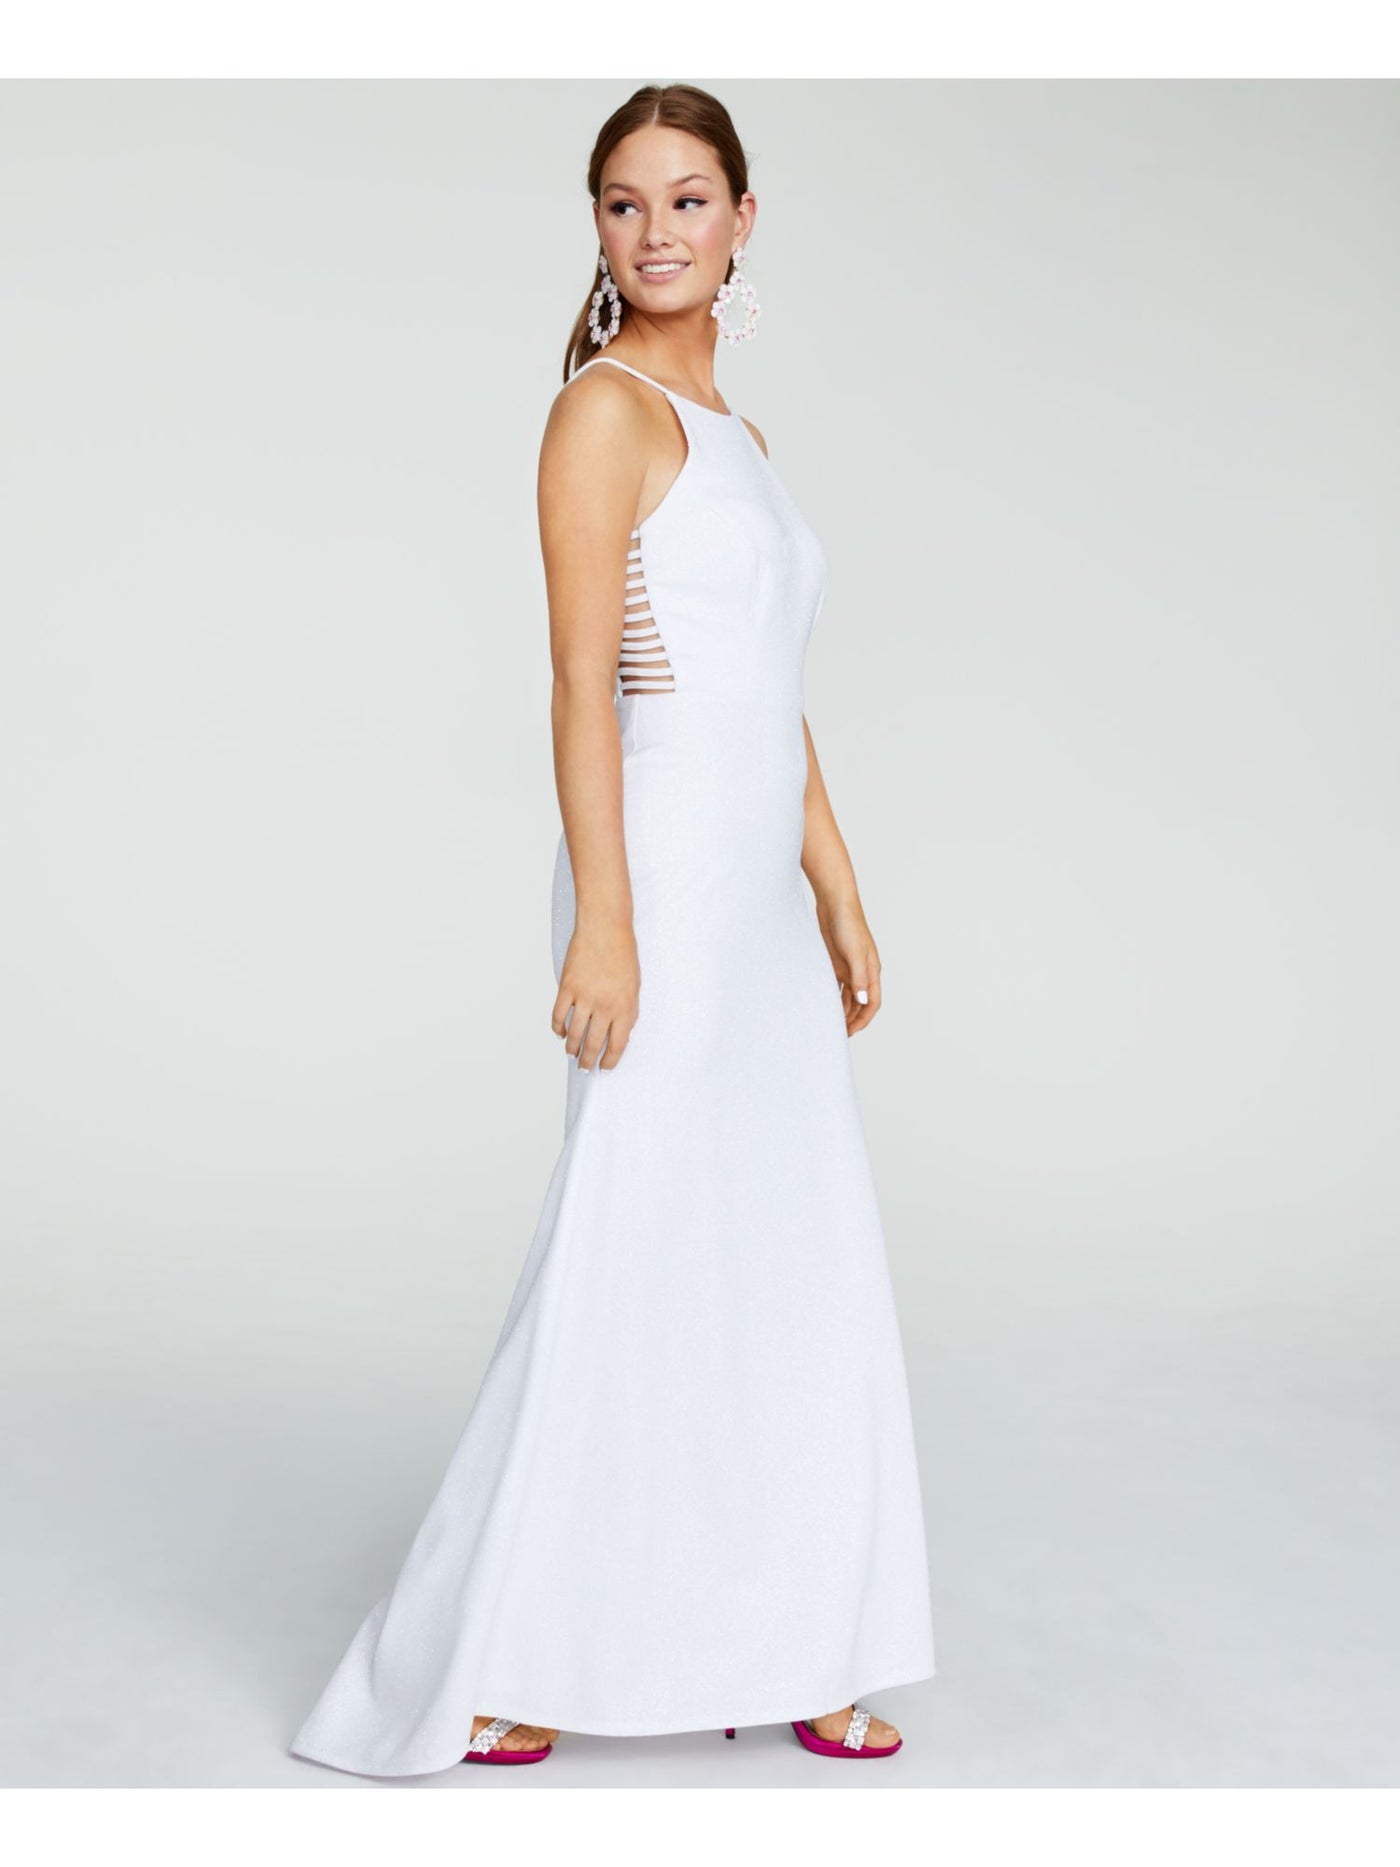 JUMP APPAREL Womens White Glitter Cut Out Sleeveless Halter Full-Length Formal Fit + Flare Dress Juniors 5\6